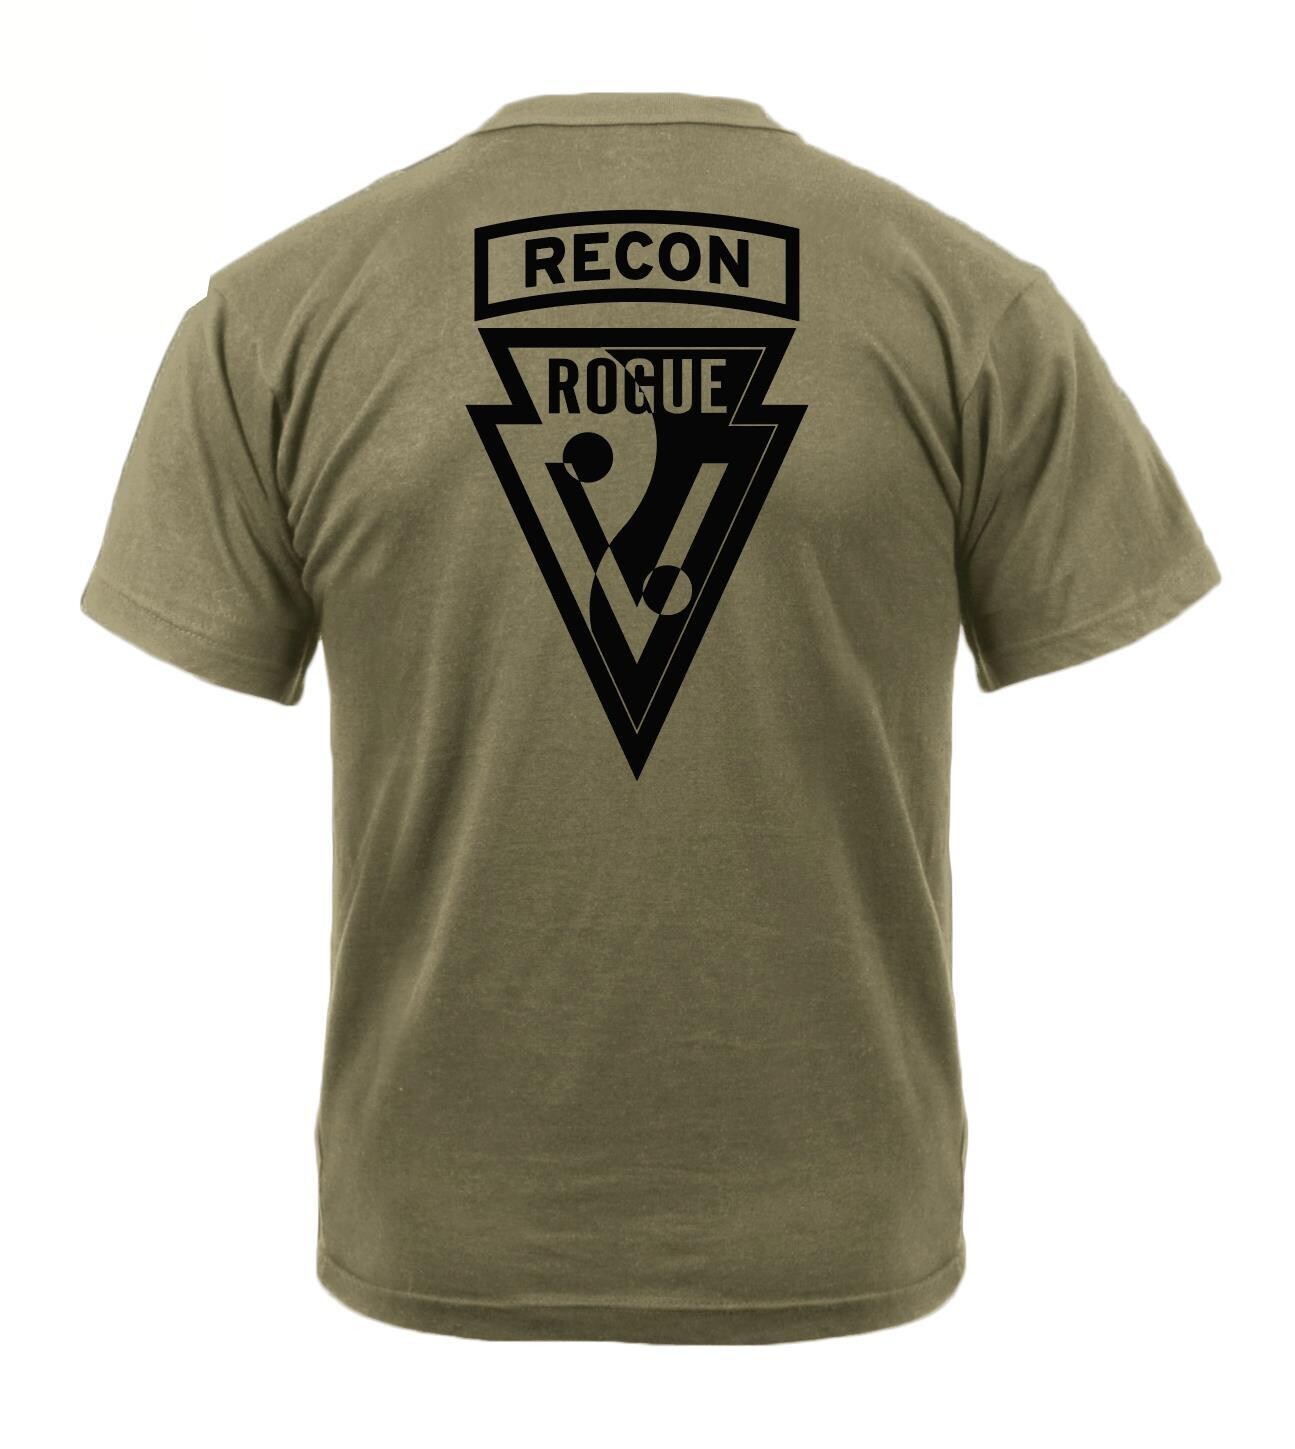 2nd PLT C Trp "Rogue" 1-33 CAV Coyote Shirt